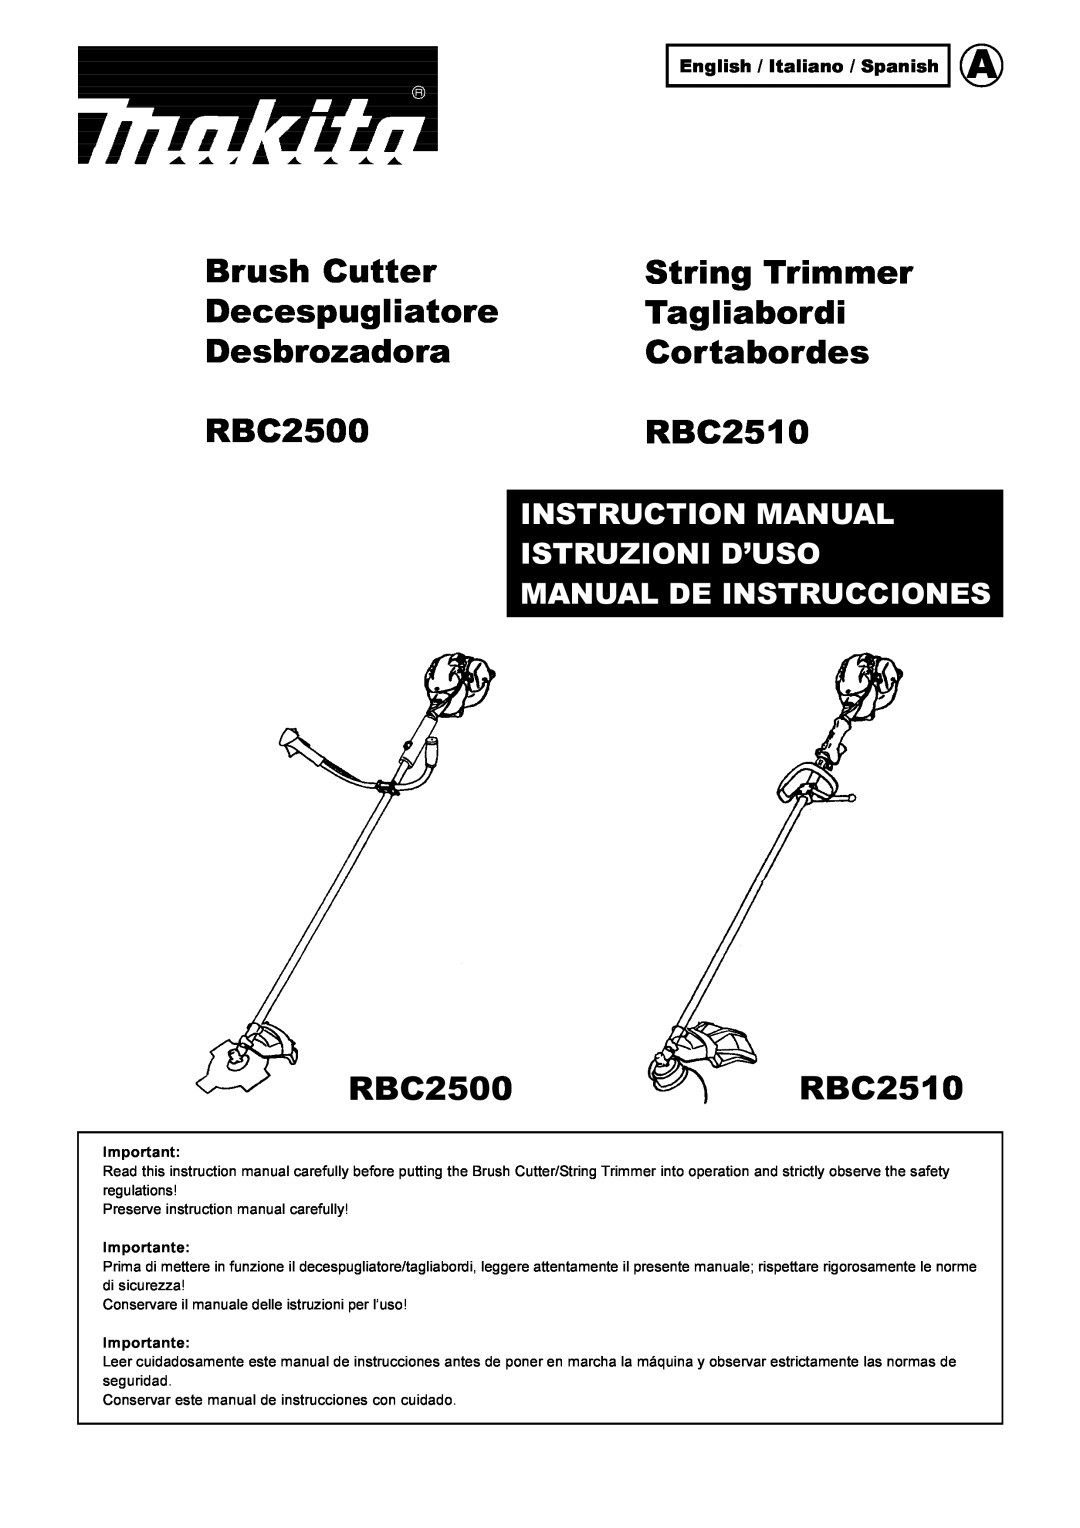 Makita RBC2500 instruction manual English / Italiano / Spanish, Brush Cutter, String Trimmer, Decespugliatore, Tagliabordi 